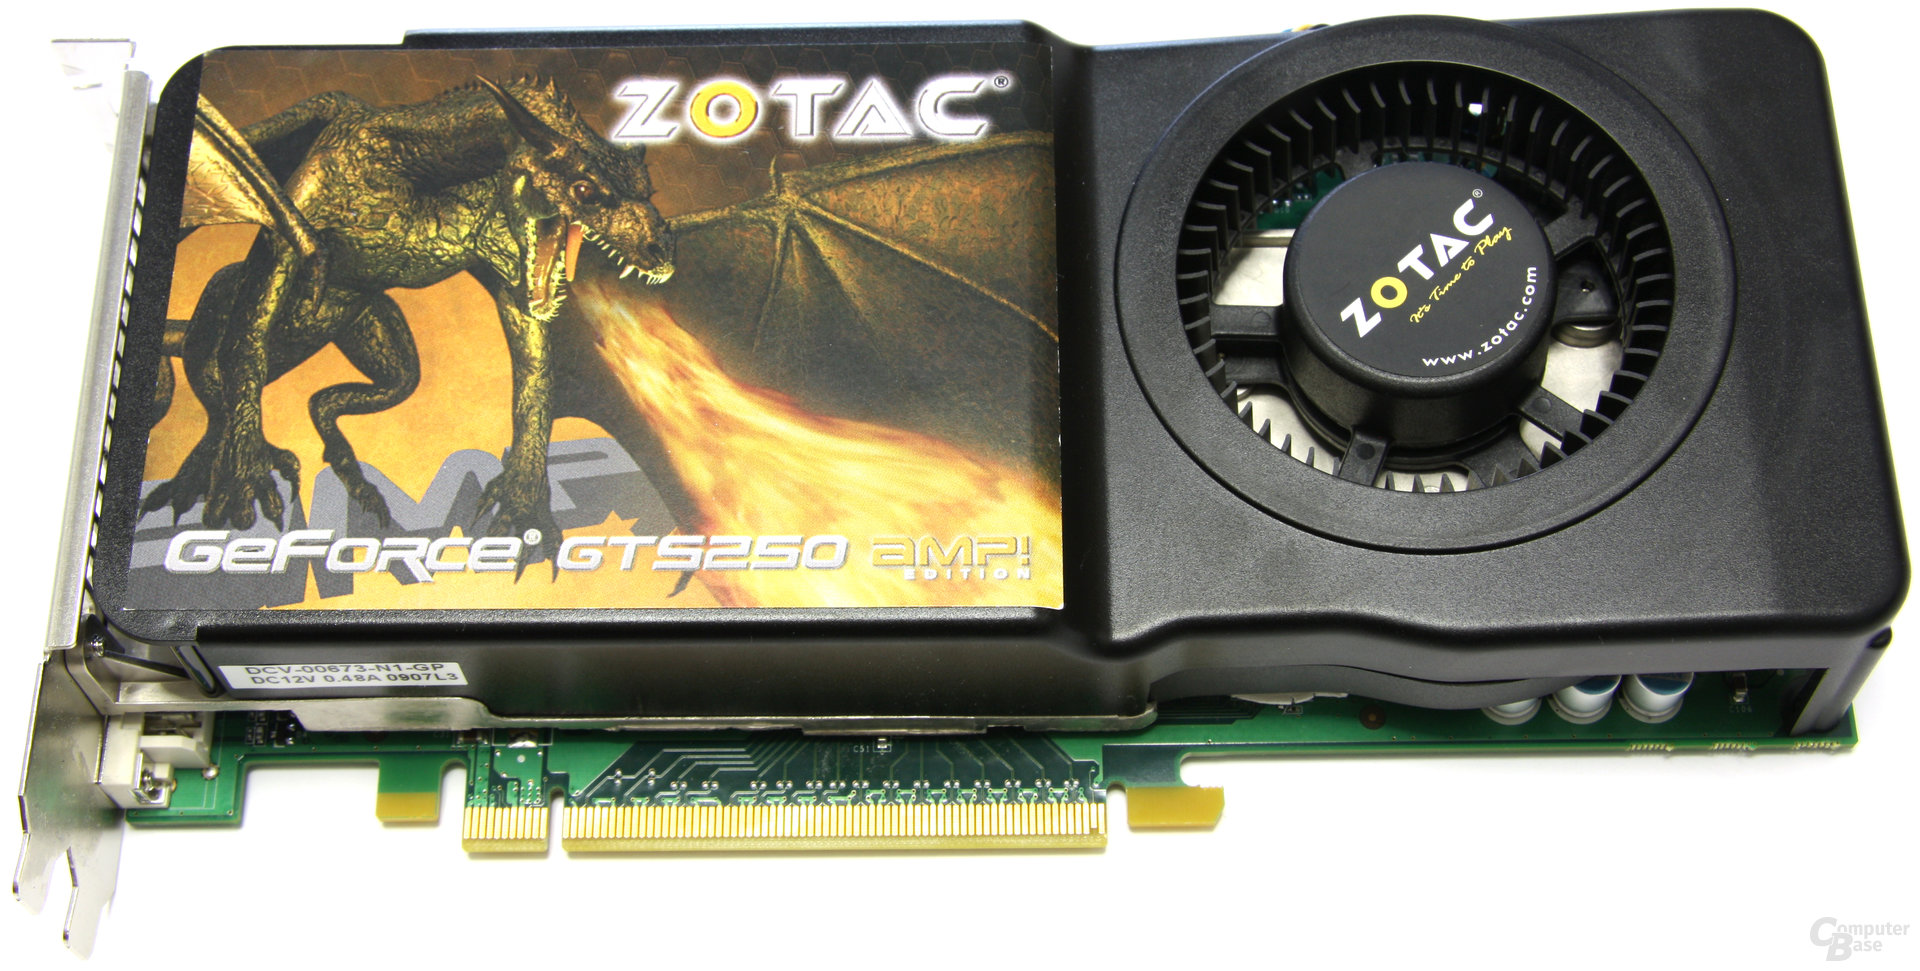 Zotac GeForce GTS 250 AMP!